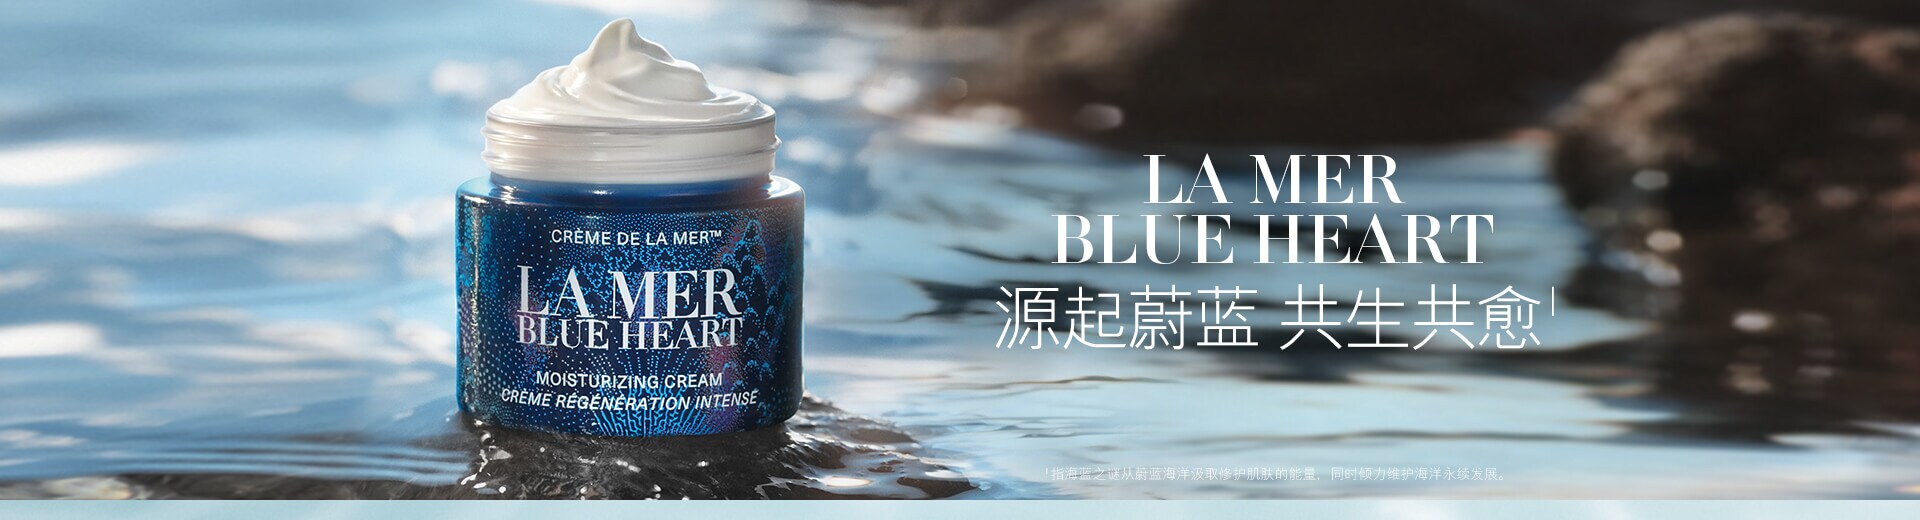 LA MER BLUE HEART 源起蔚蓝 共生共愈* *指海蓝之谜从蔚蓝海洋汲取修护肌肤的能量，同时倾力维护海洋永续发展。